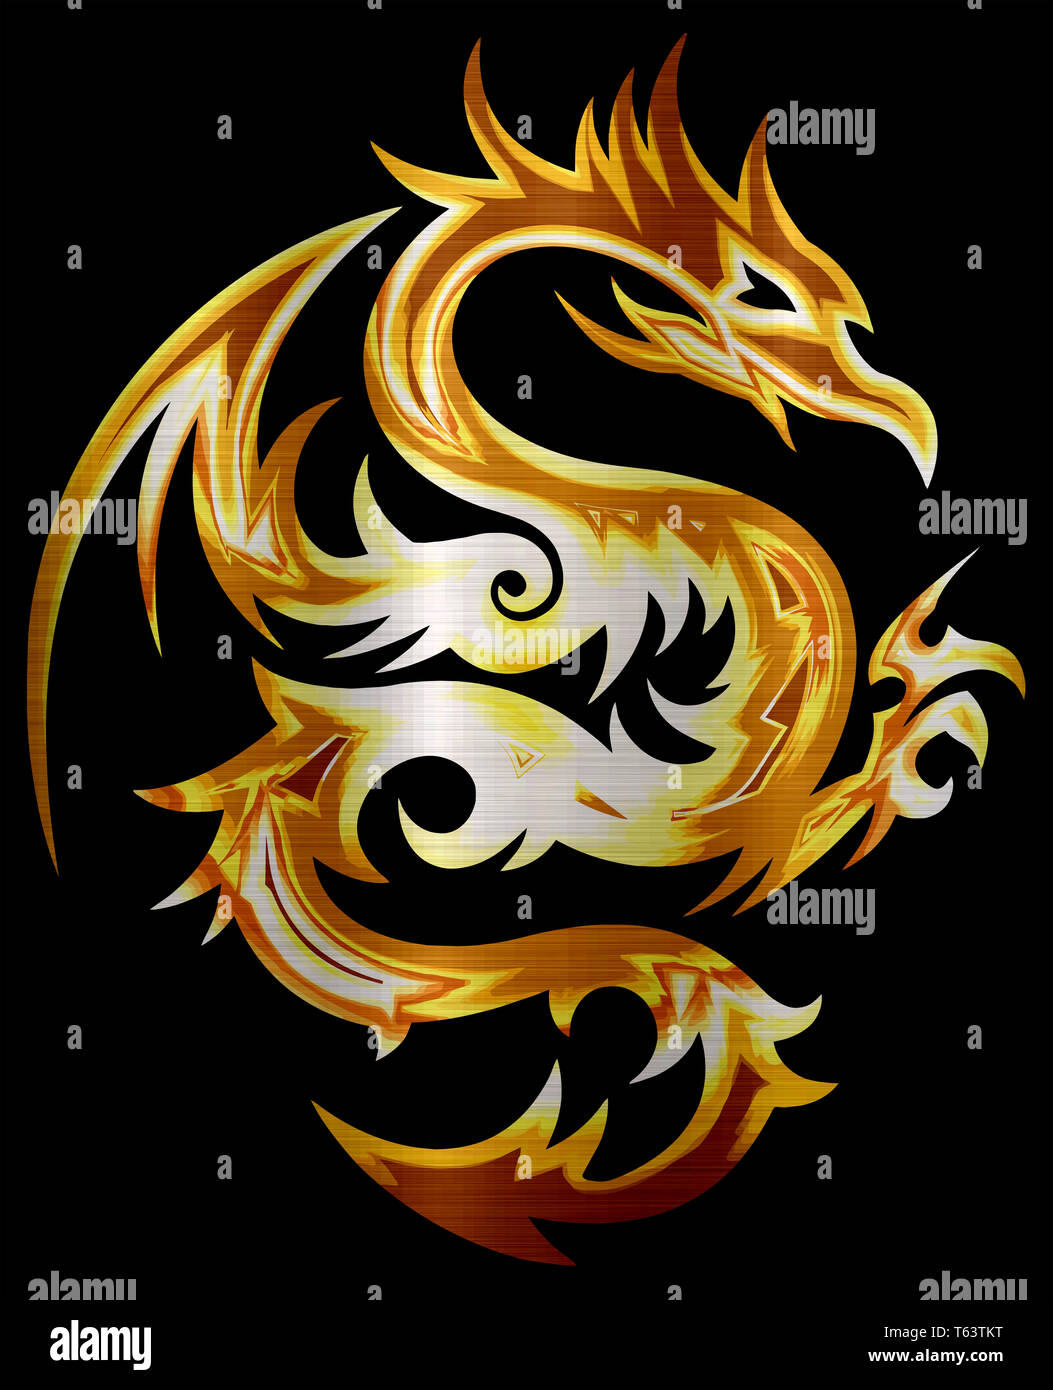 chinese dragon mythology golden fire metallic flame illustration Stock Photo